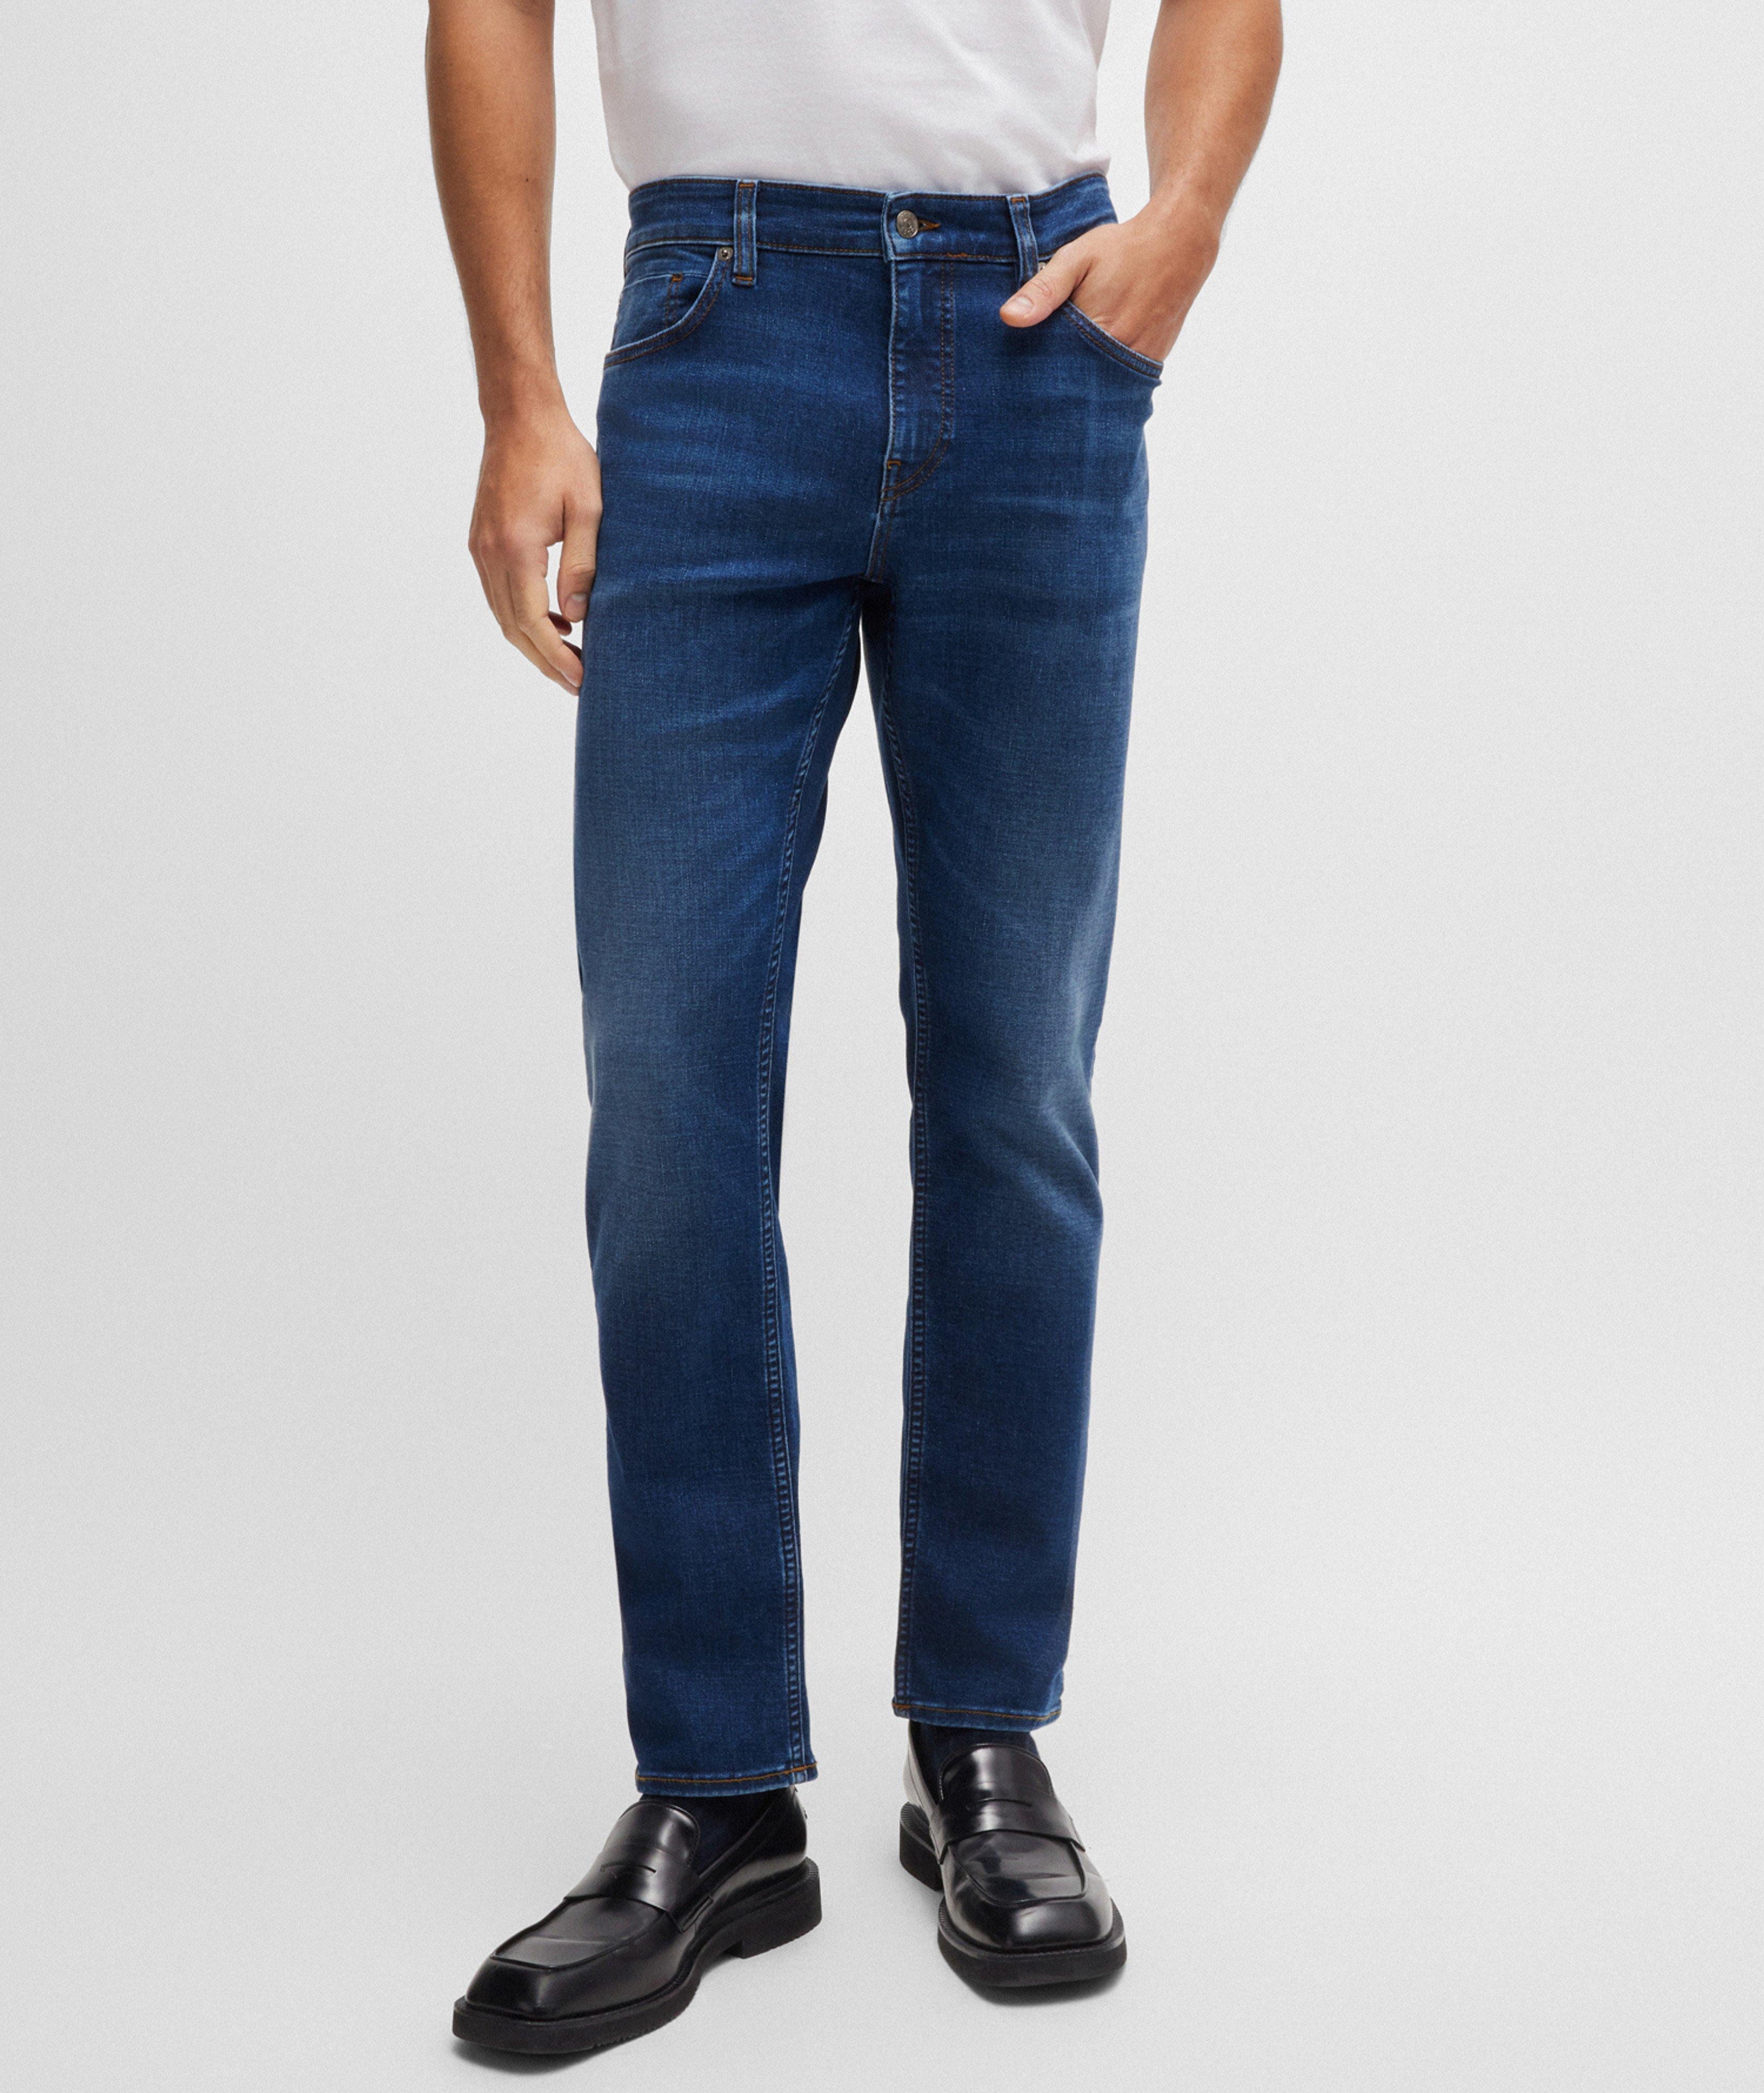 Delaware Cotton-Blend Jeans image 2